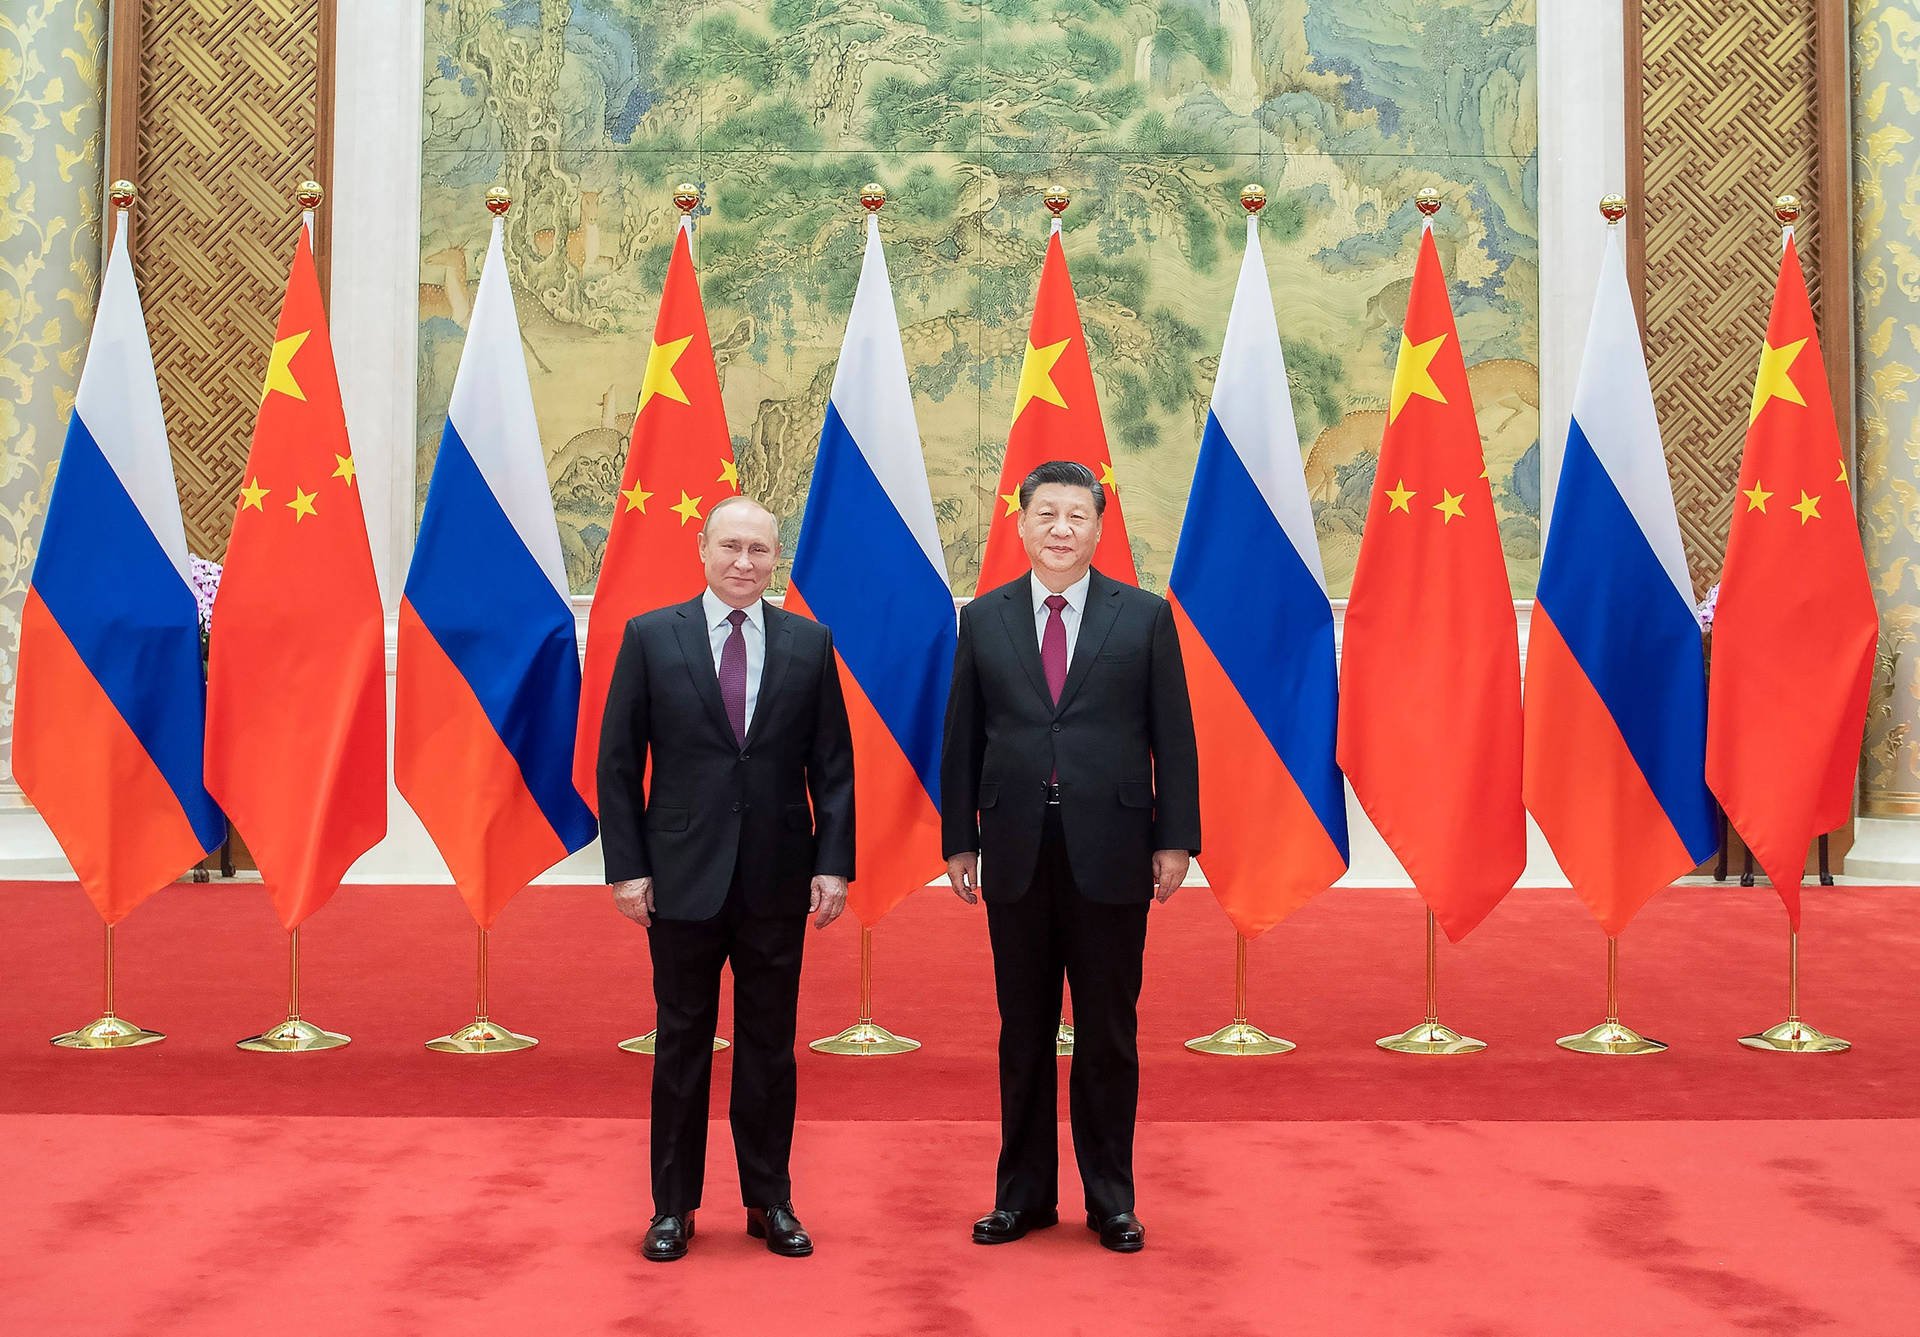 Vladimir Putin And Xi Jinping Picture